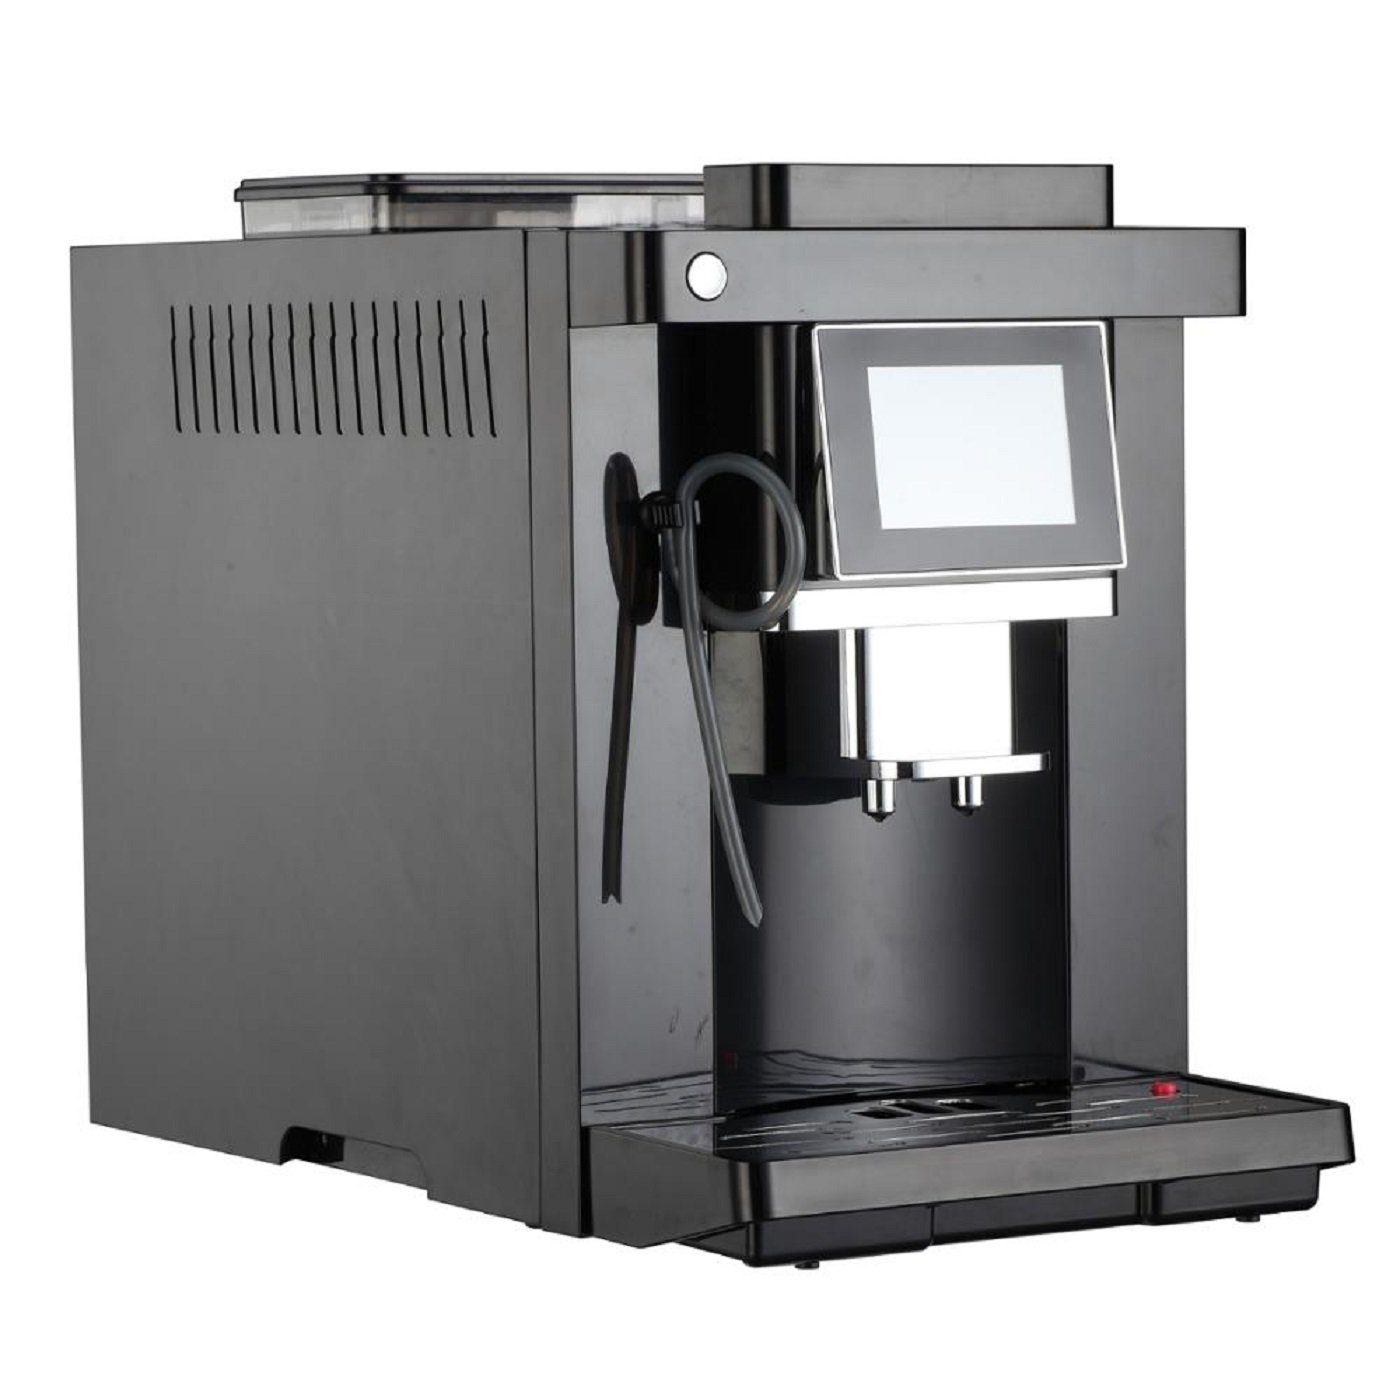 Espresso, Kaffee, Cappuccino, Kaffeevollautomat Kaffeevollautomat CLT-Q007, Maschine auf COLET Selbstreinigungsfunktion Coffee Knopfdruck,